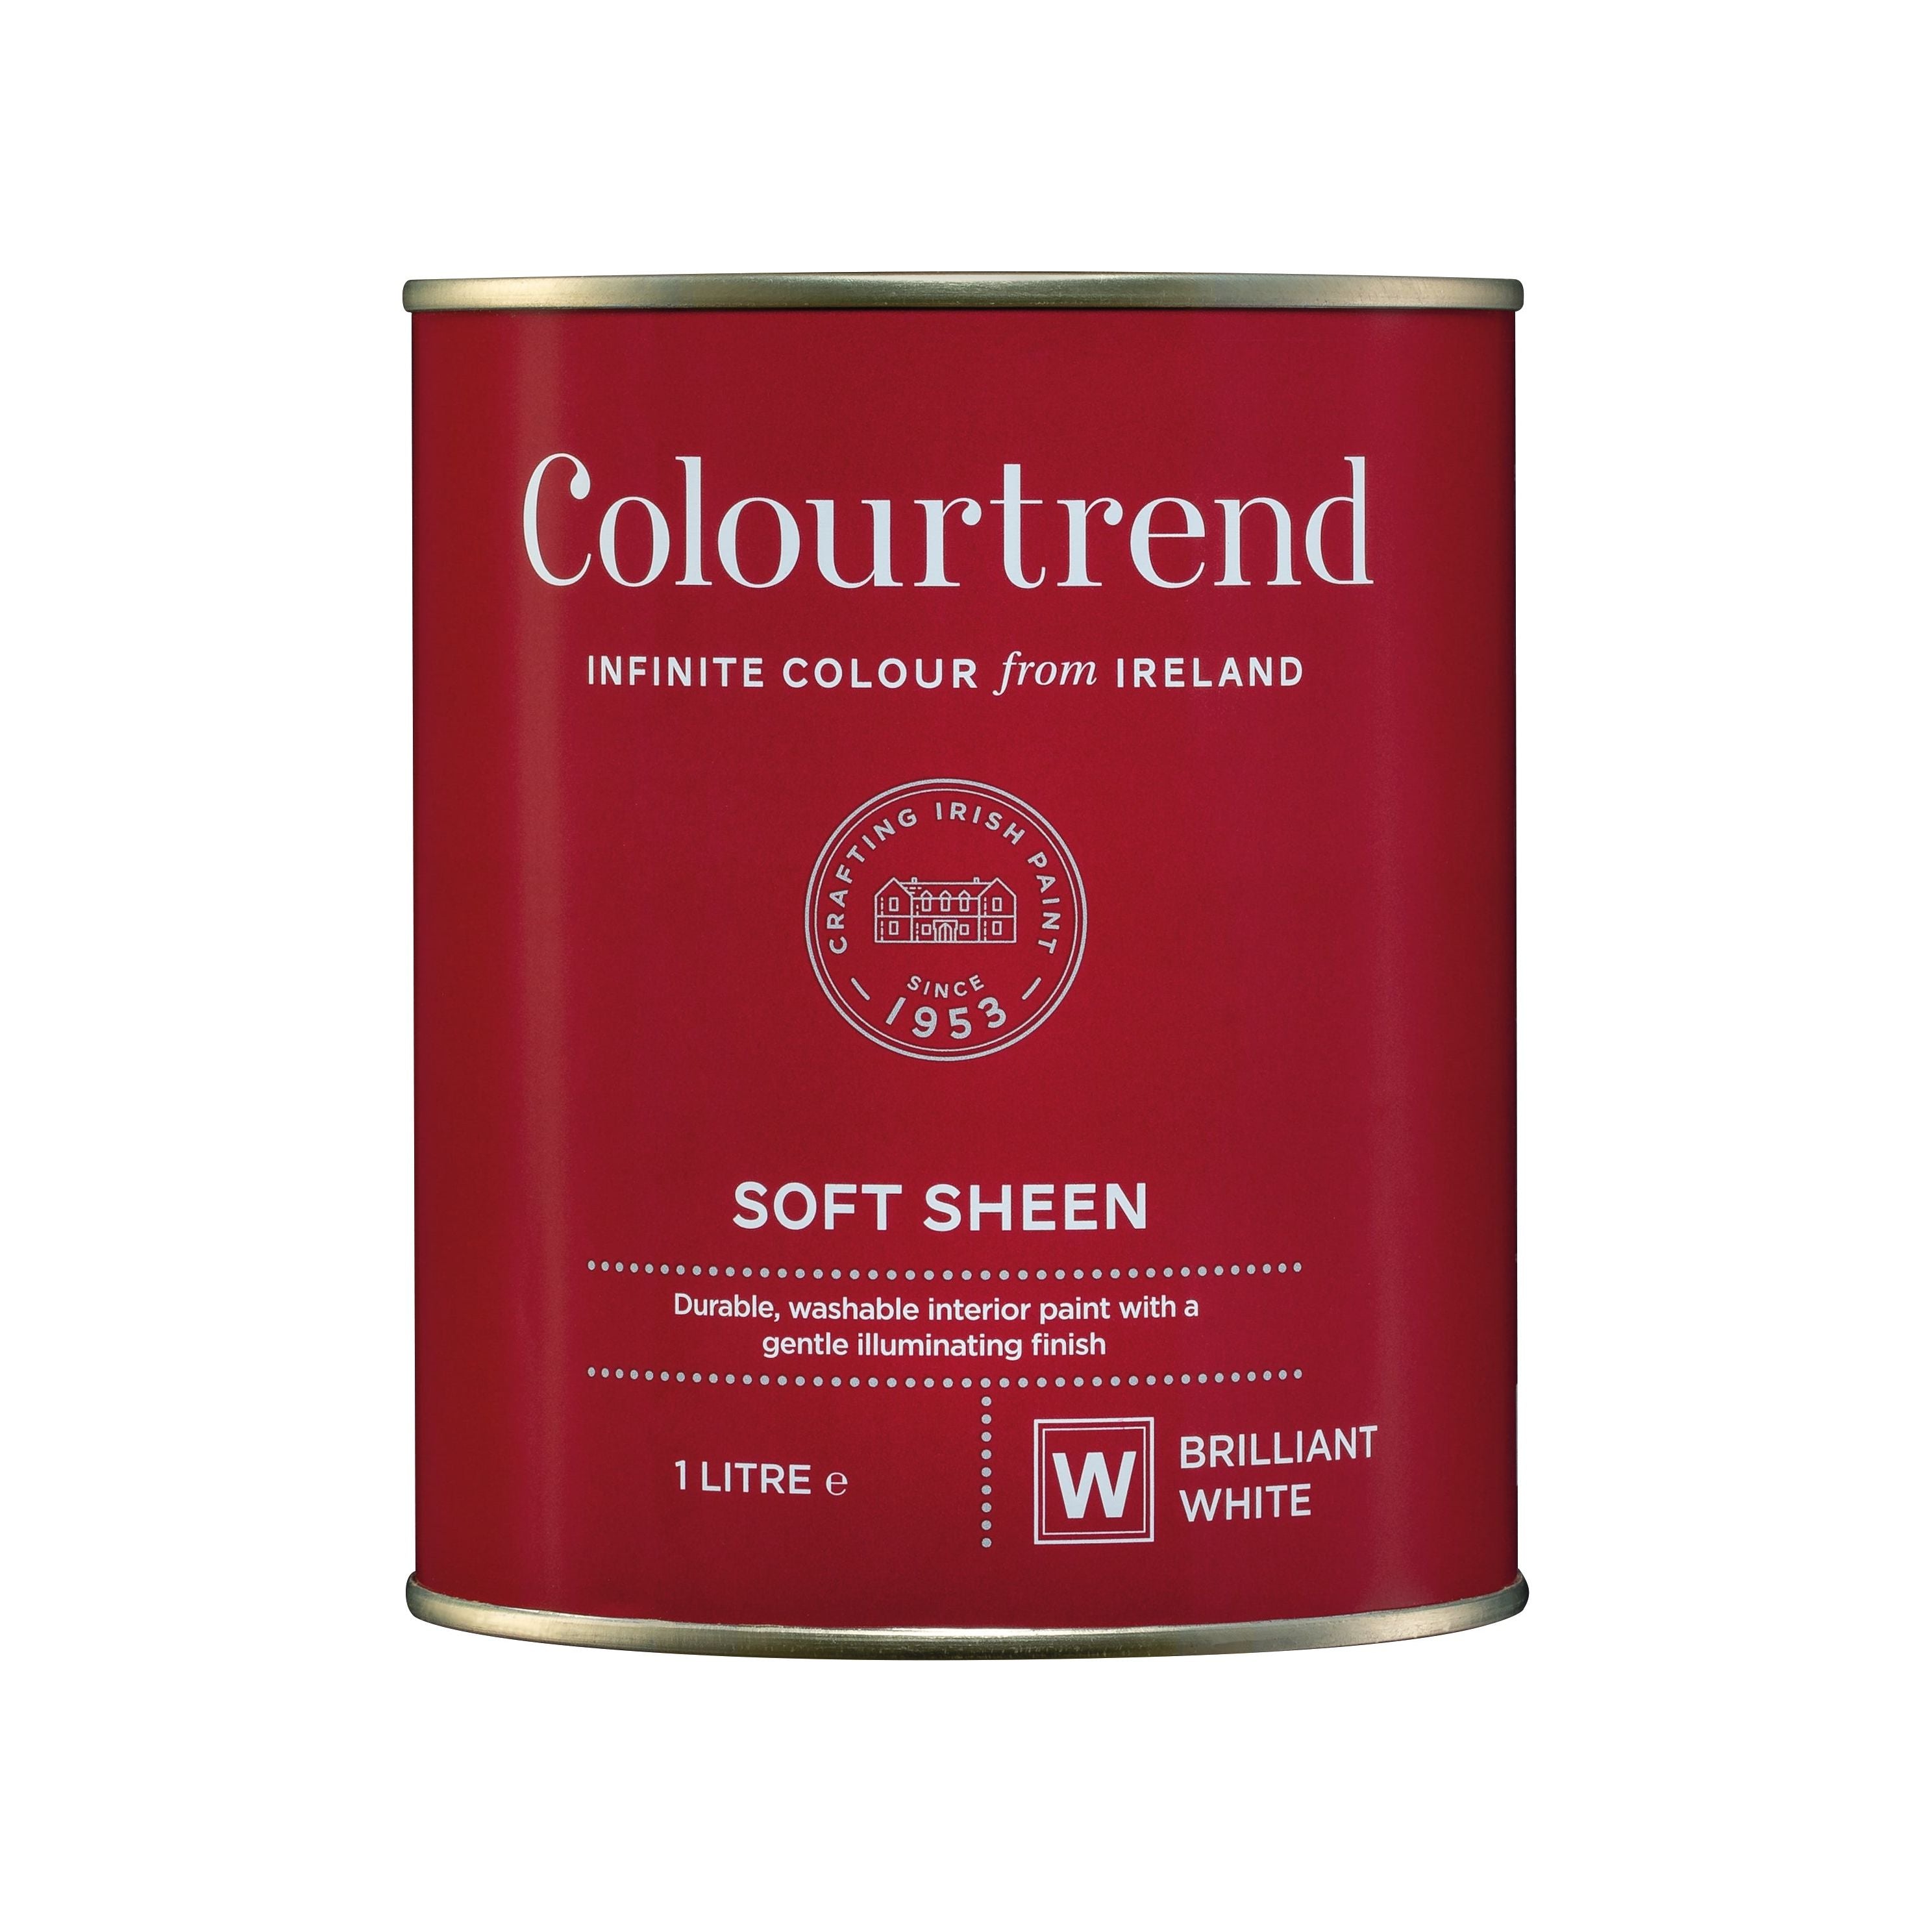 Colourtrend Soft Sheen WB